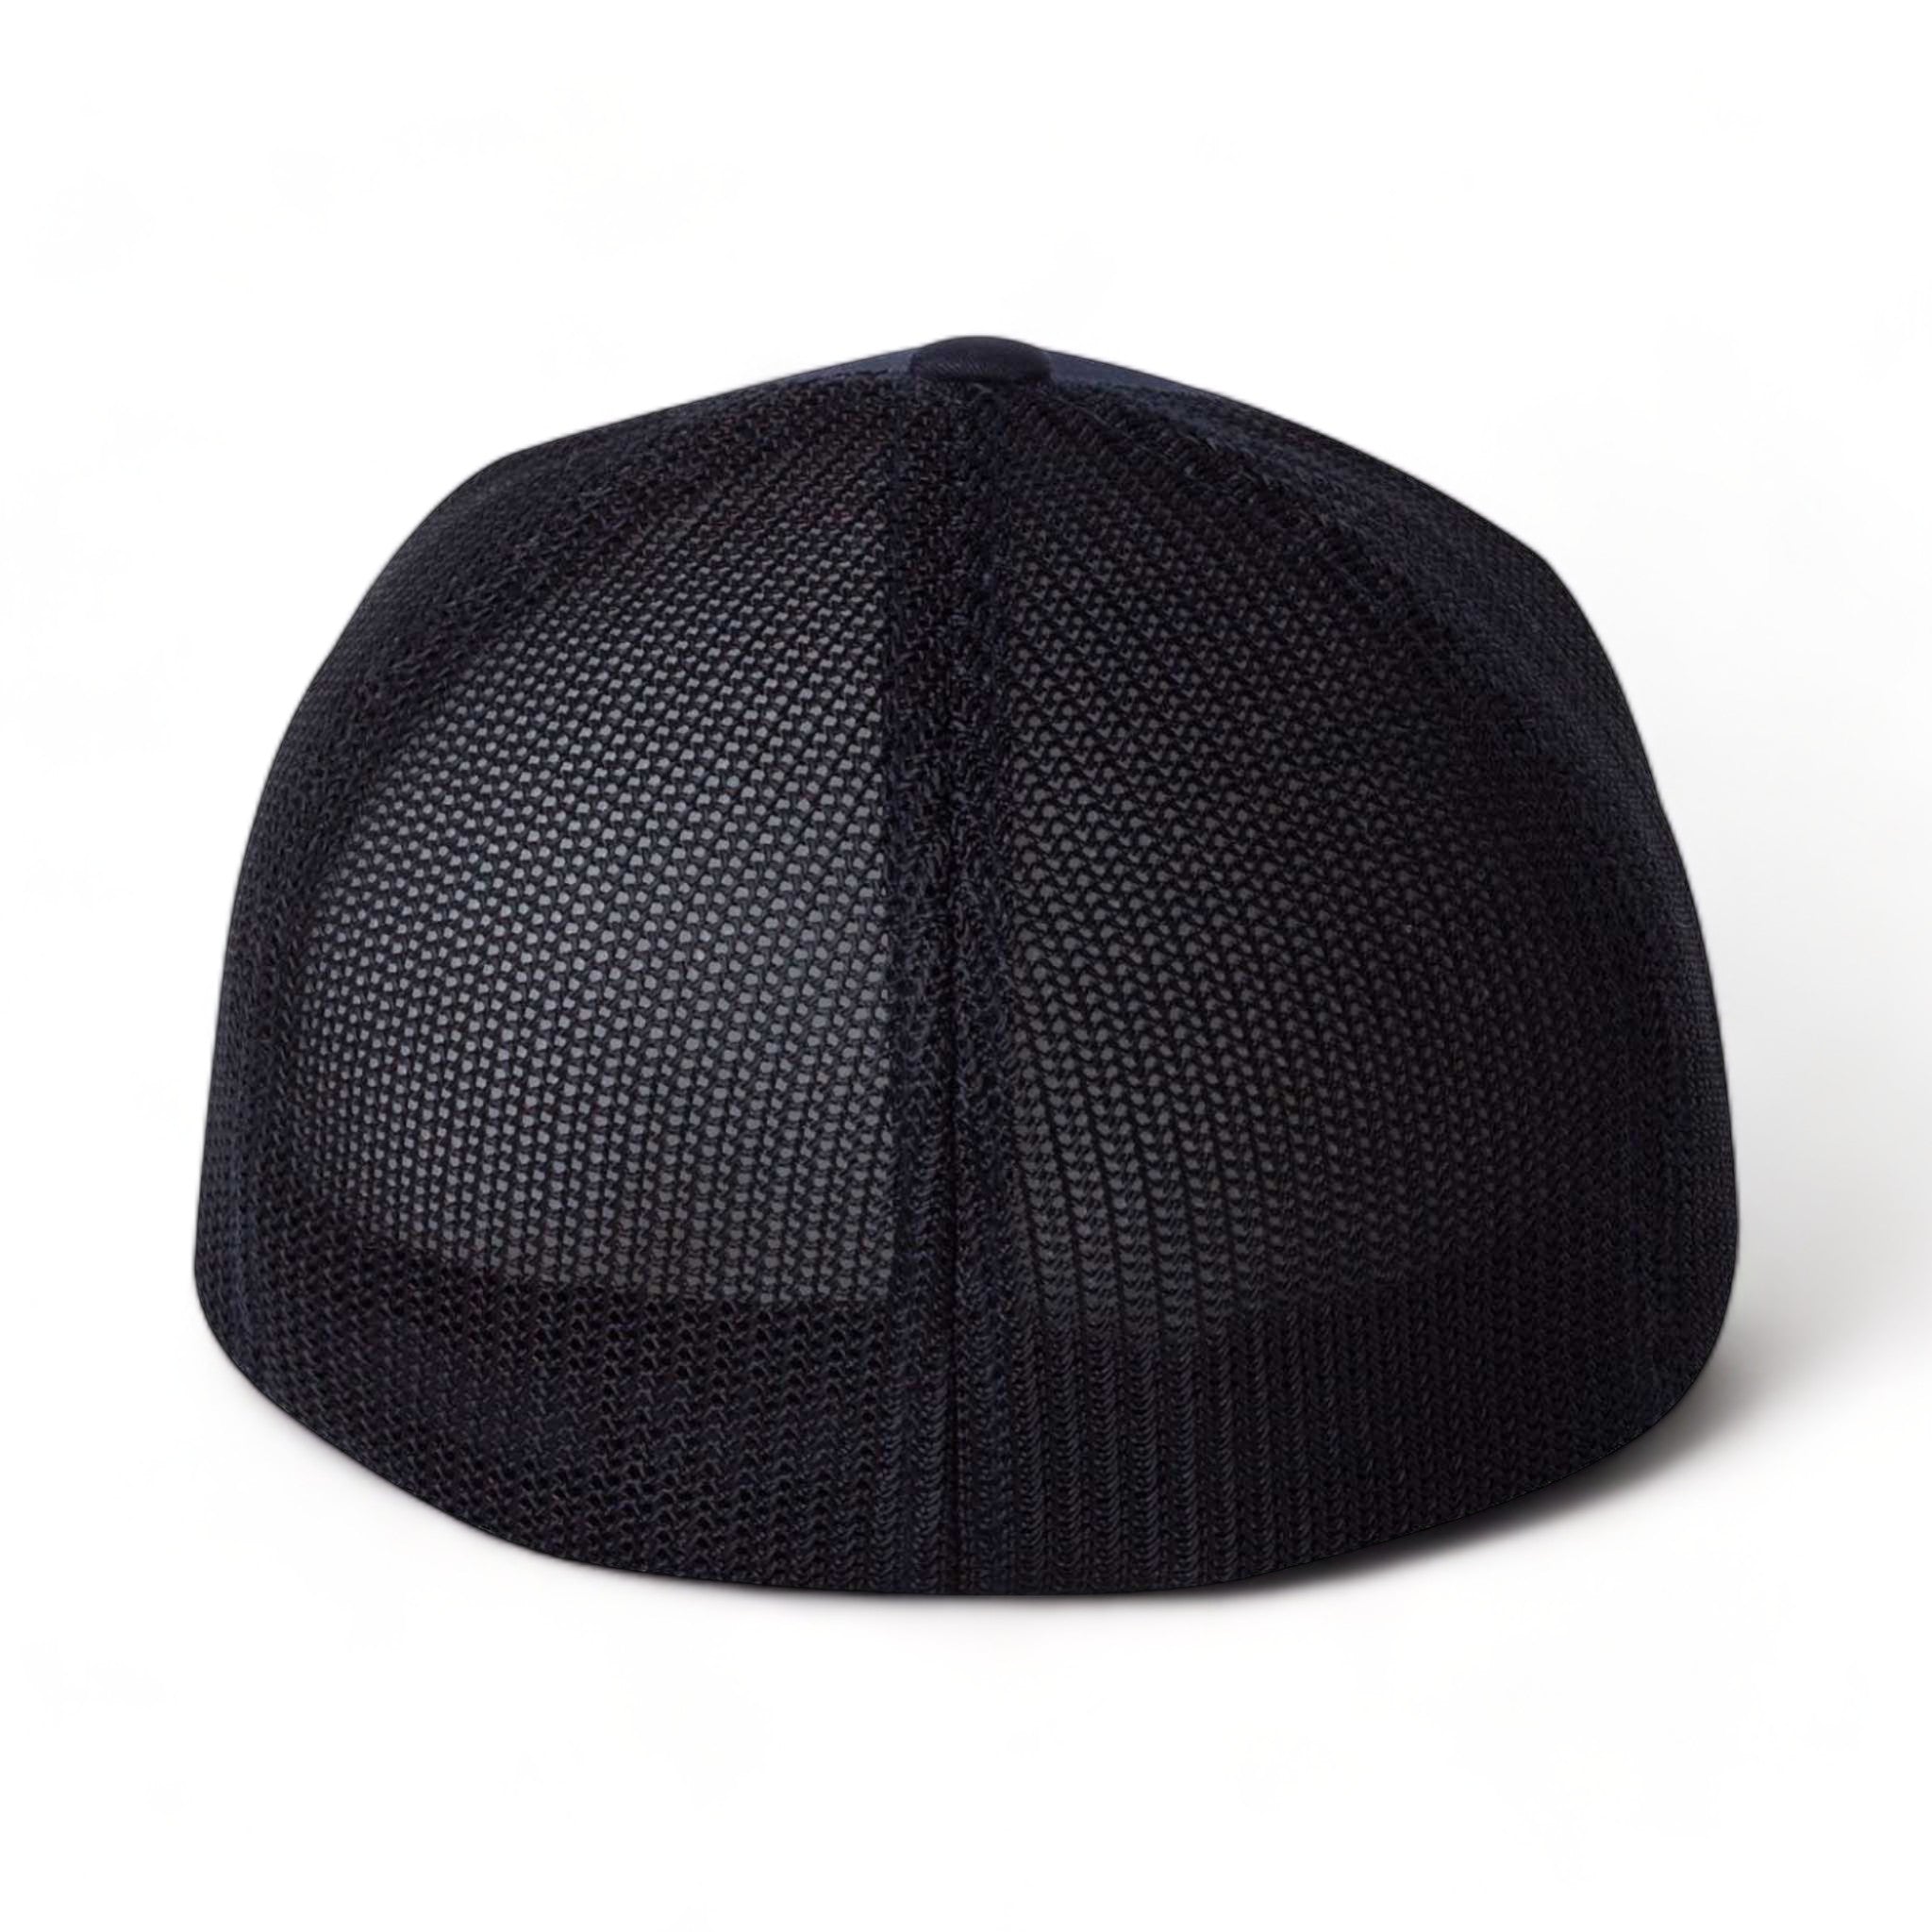 Back view of Flexfit 6511 custom hat in dark navy